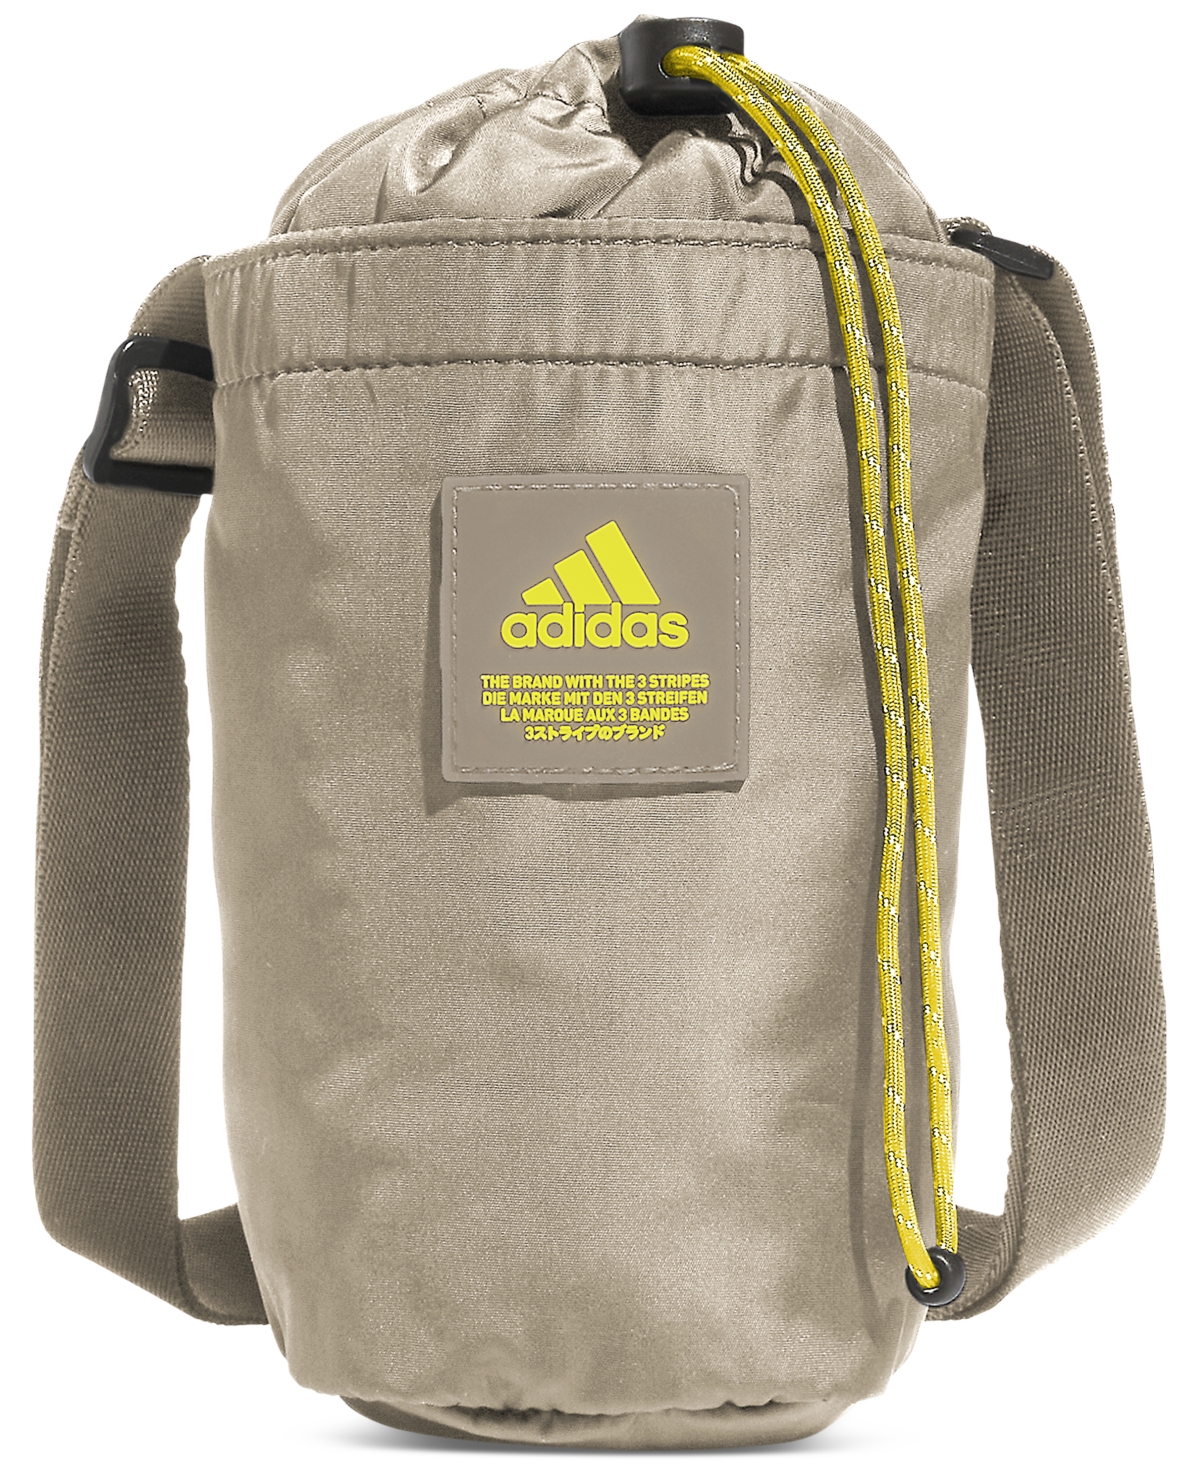 Adidas Originals Men's Hydration 2 Crossbody Bag In Medium Beige